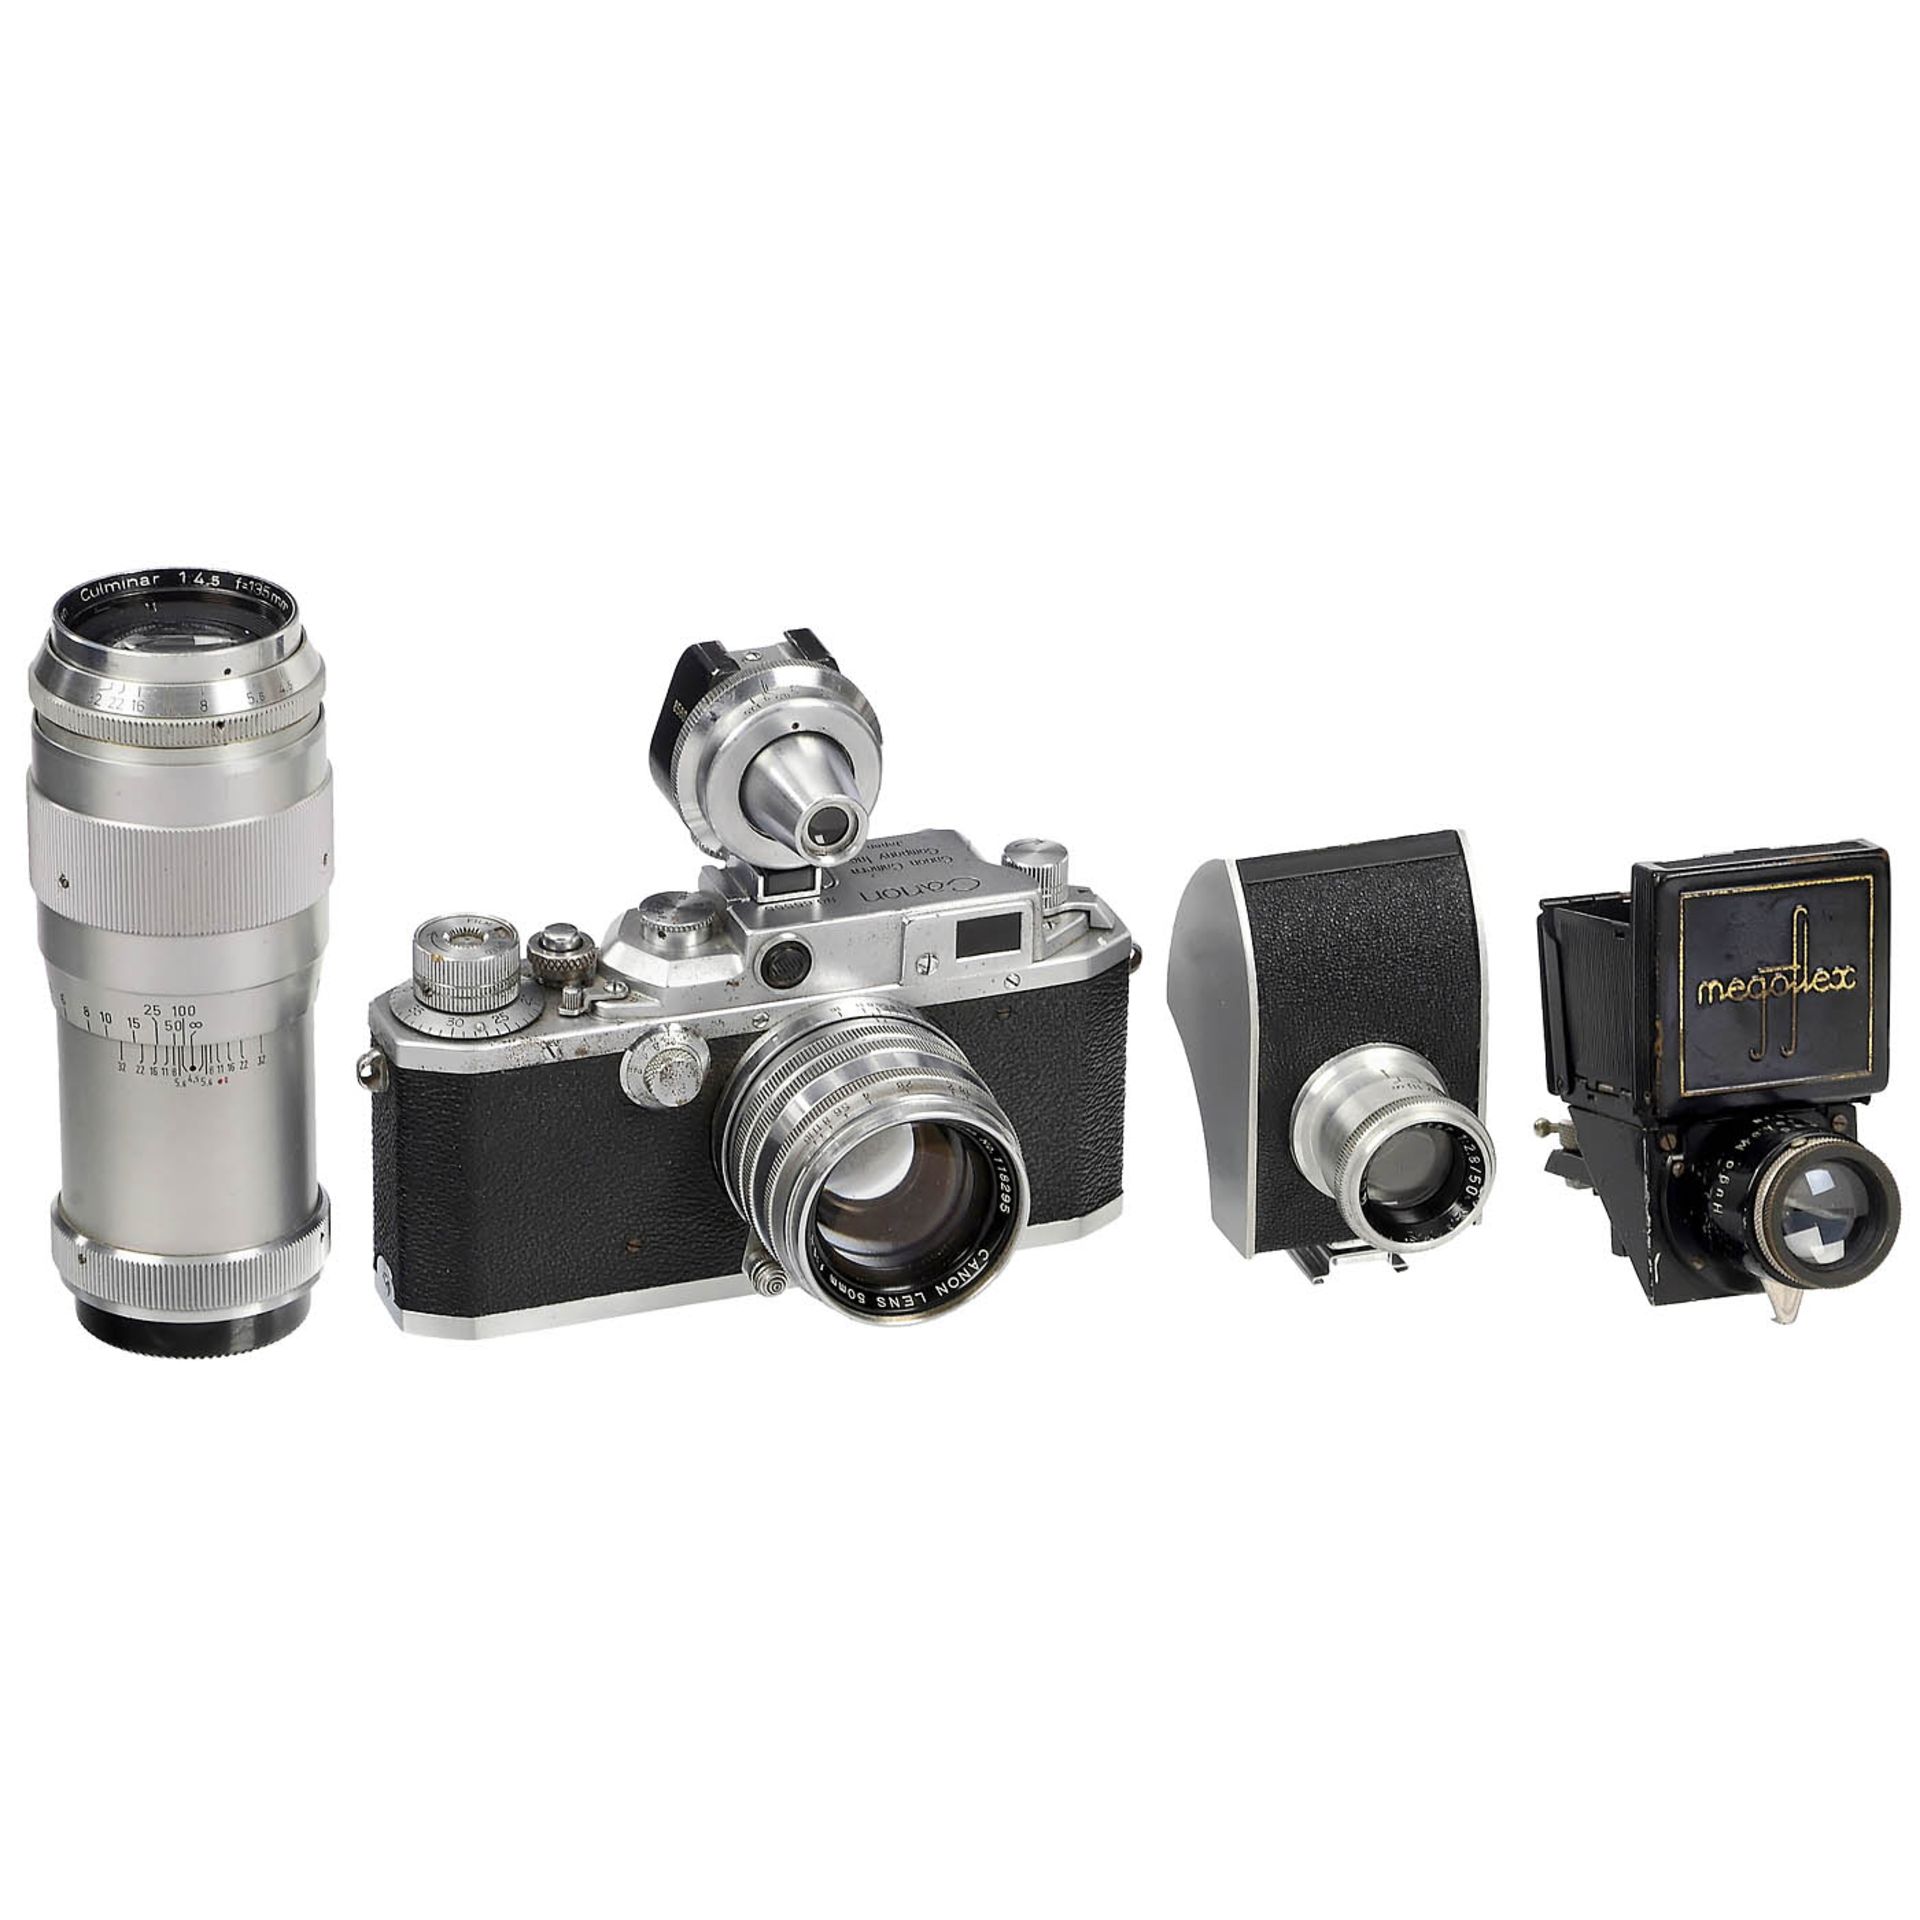 Megoflex Reflex Viewfinder for Leica, Flexameter, Canon IIIA and Accessories